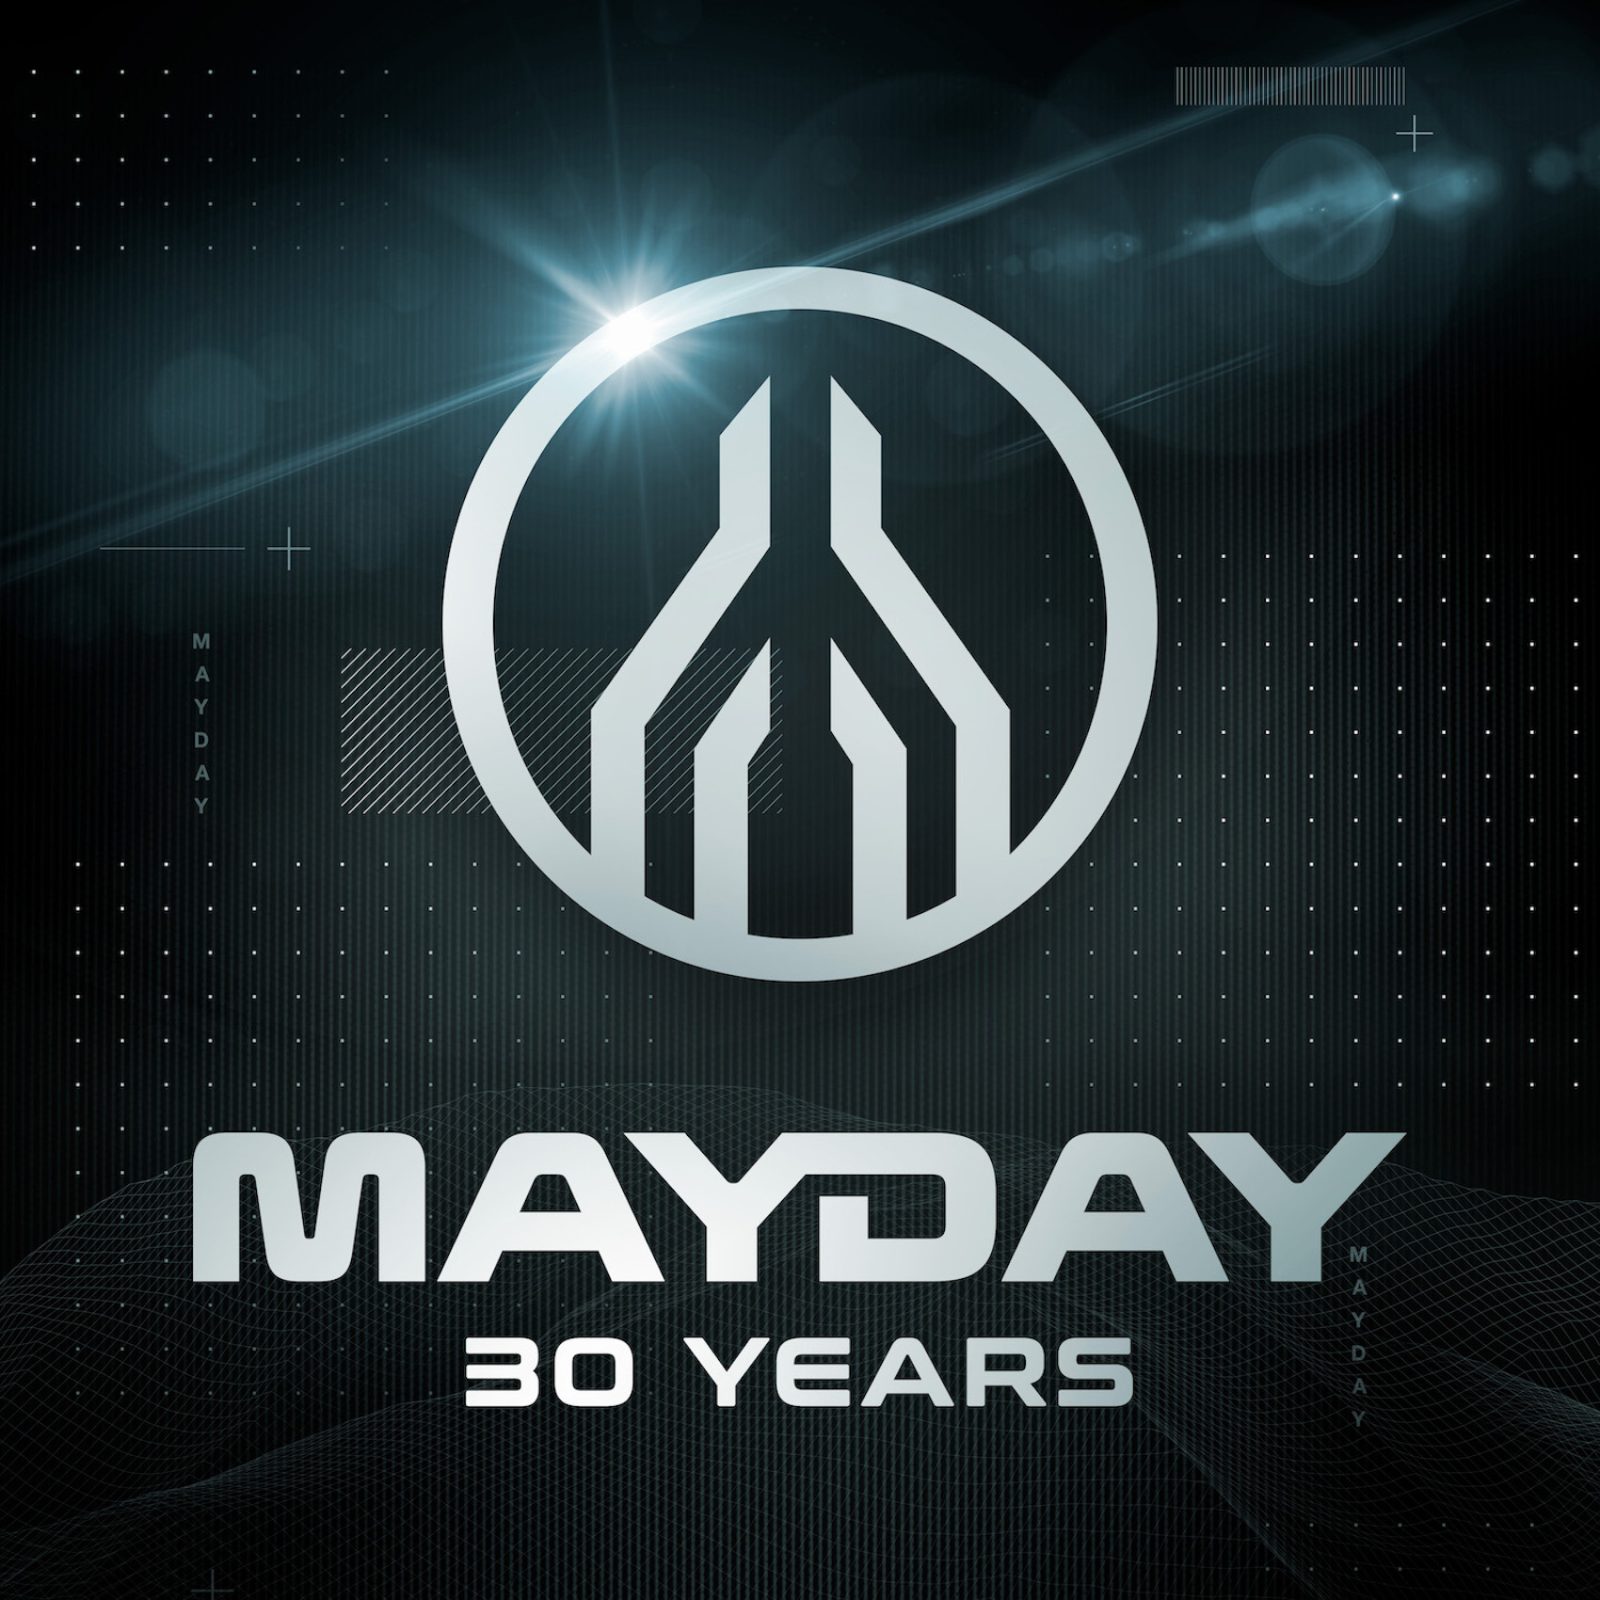 Mayday "30 Years"